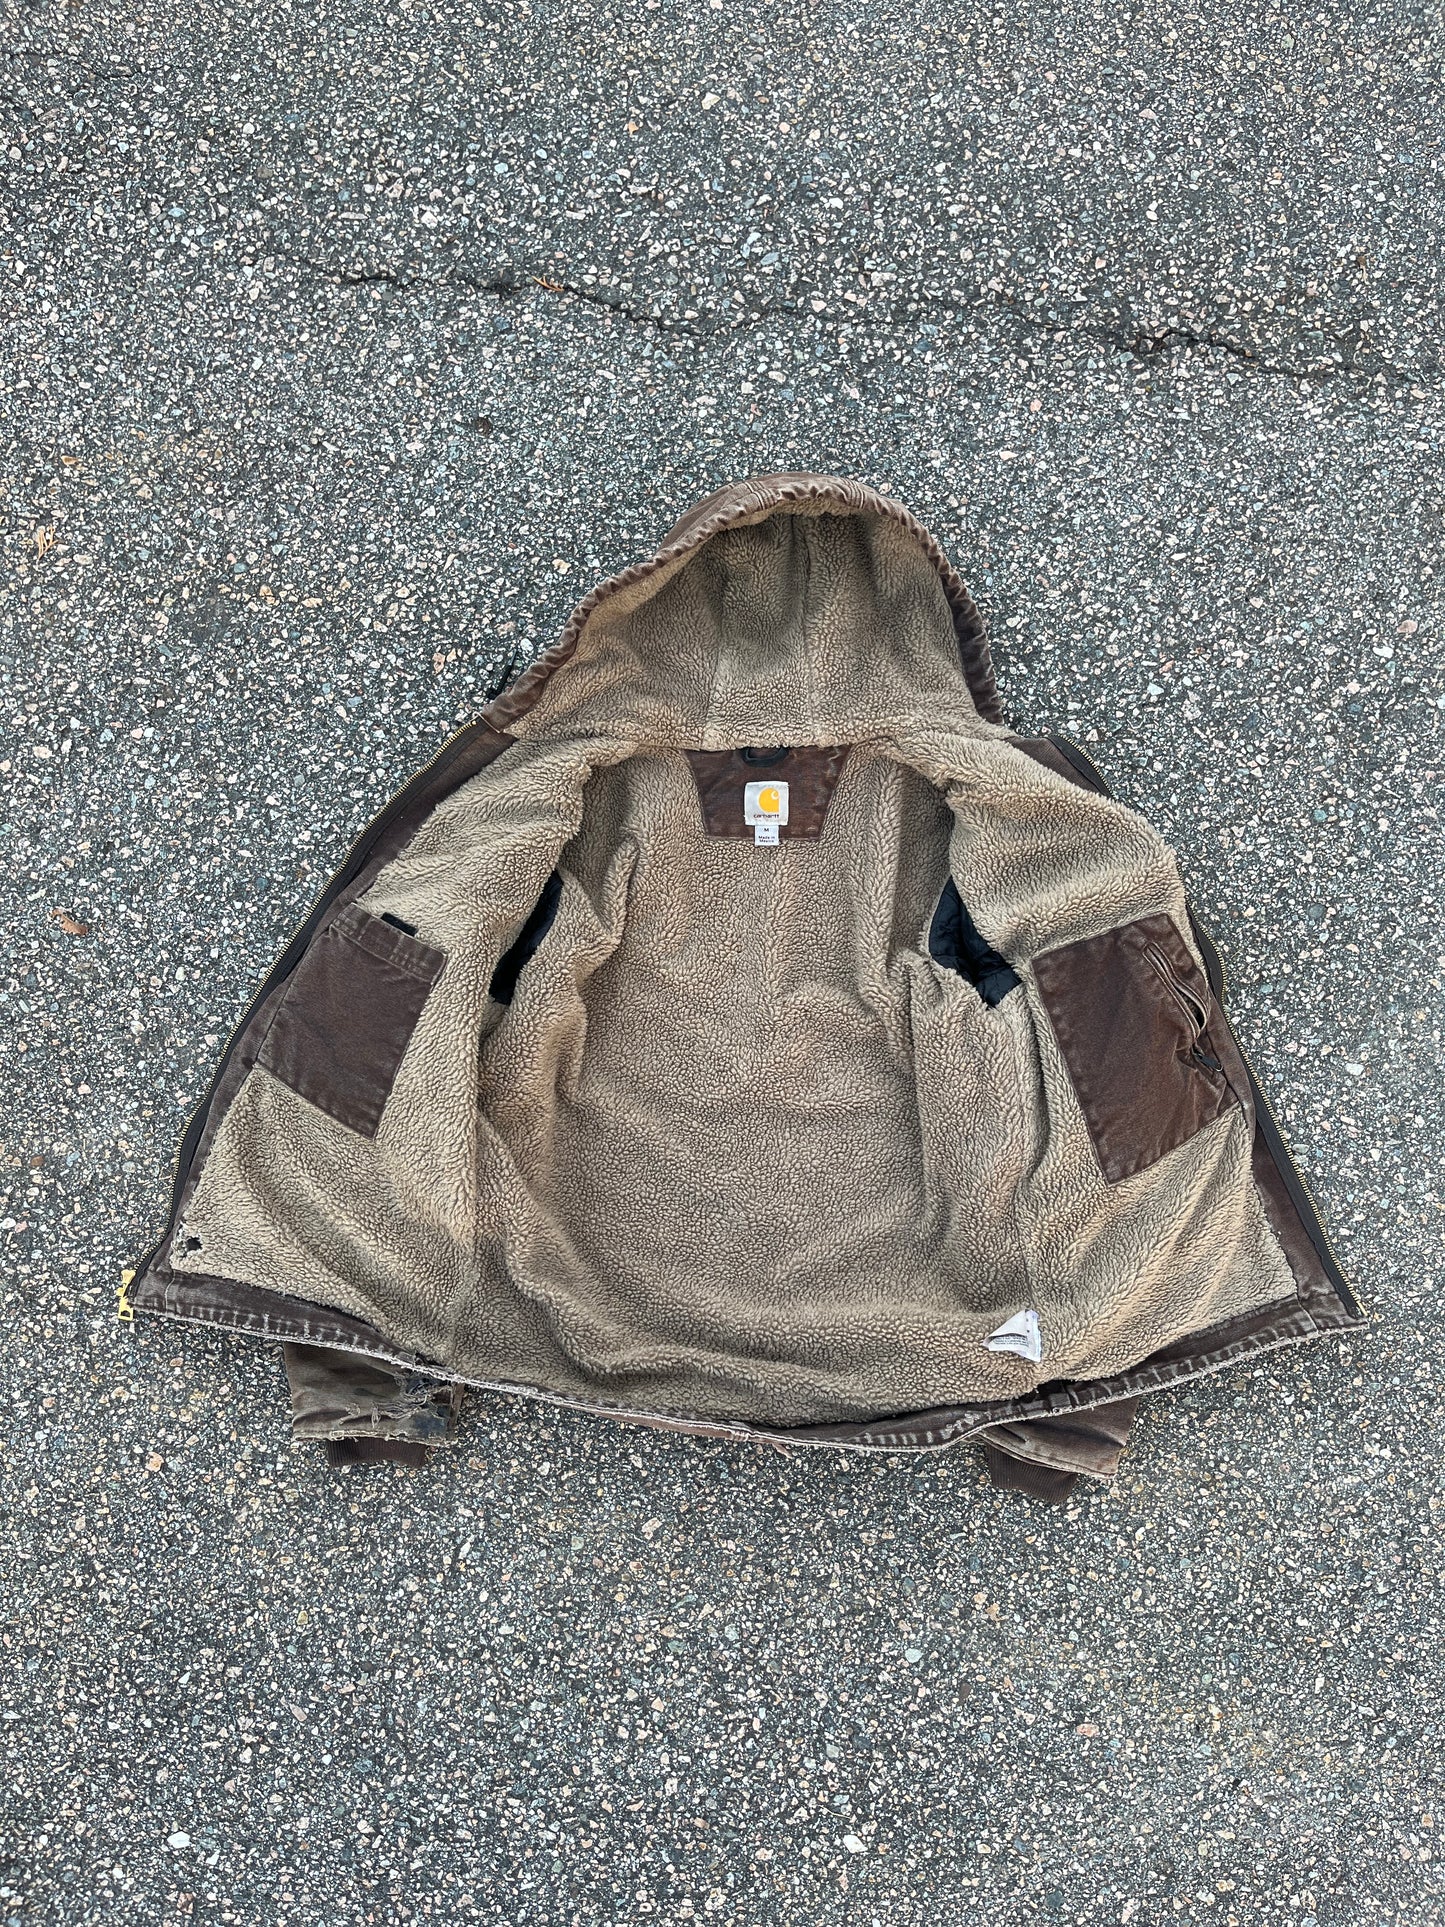 Faded Brown Carhartt Sherpa Lined Jacket - Medium